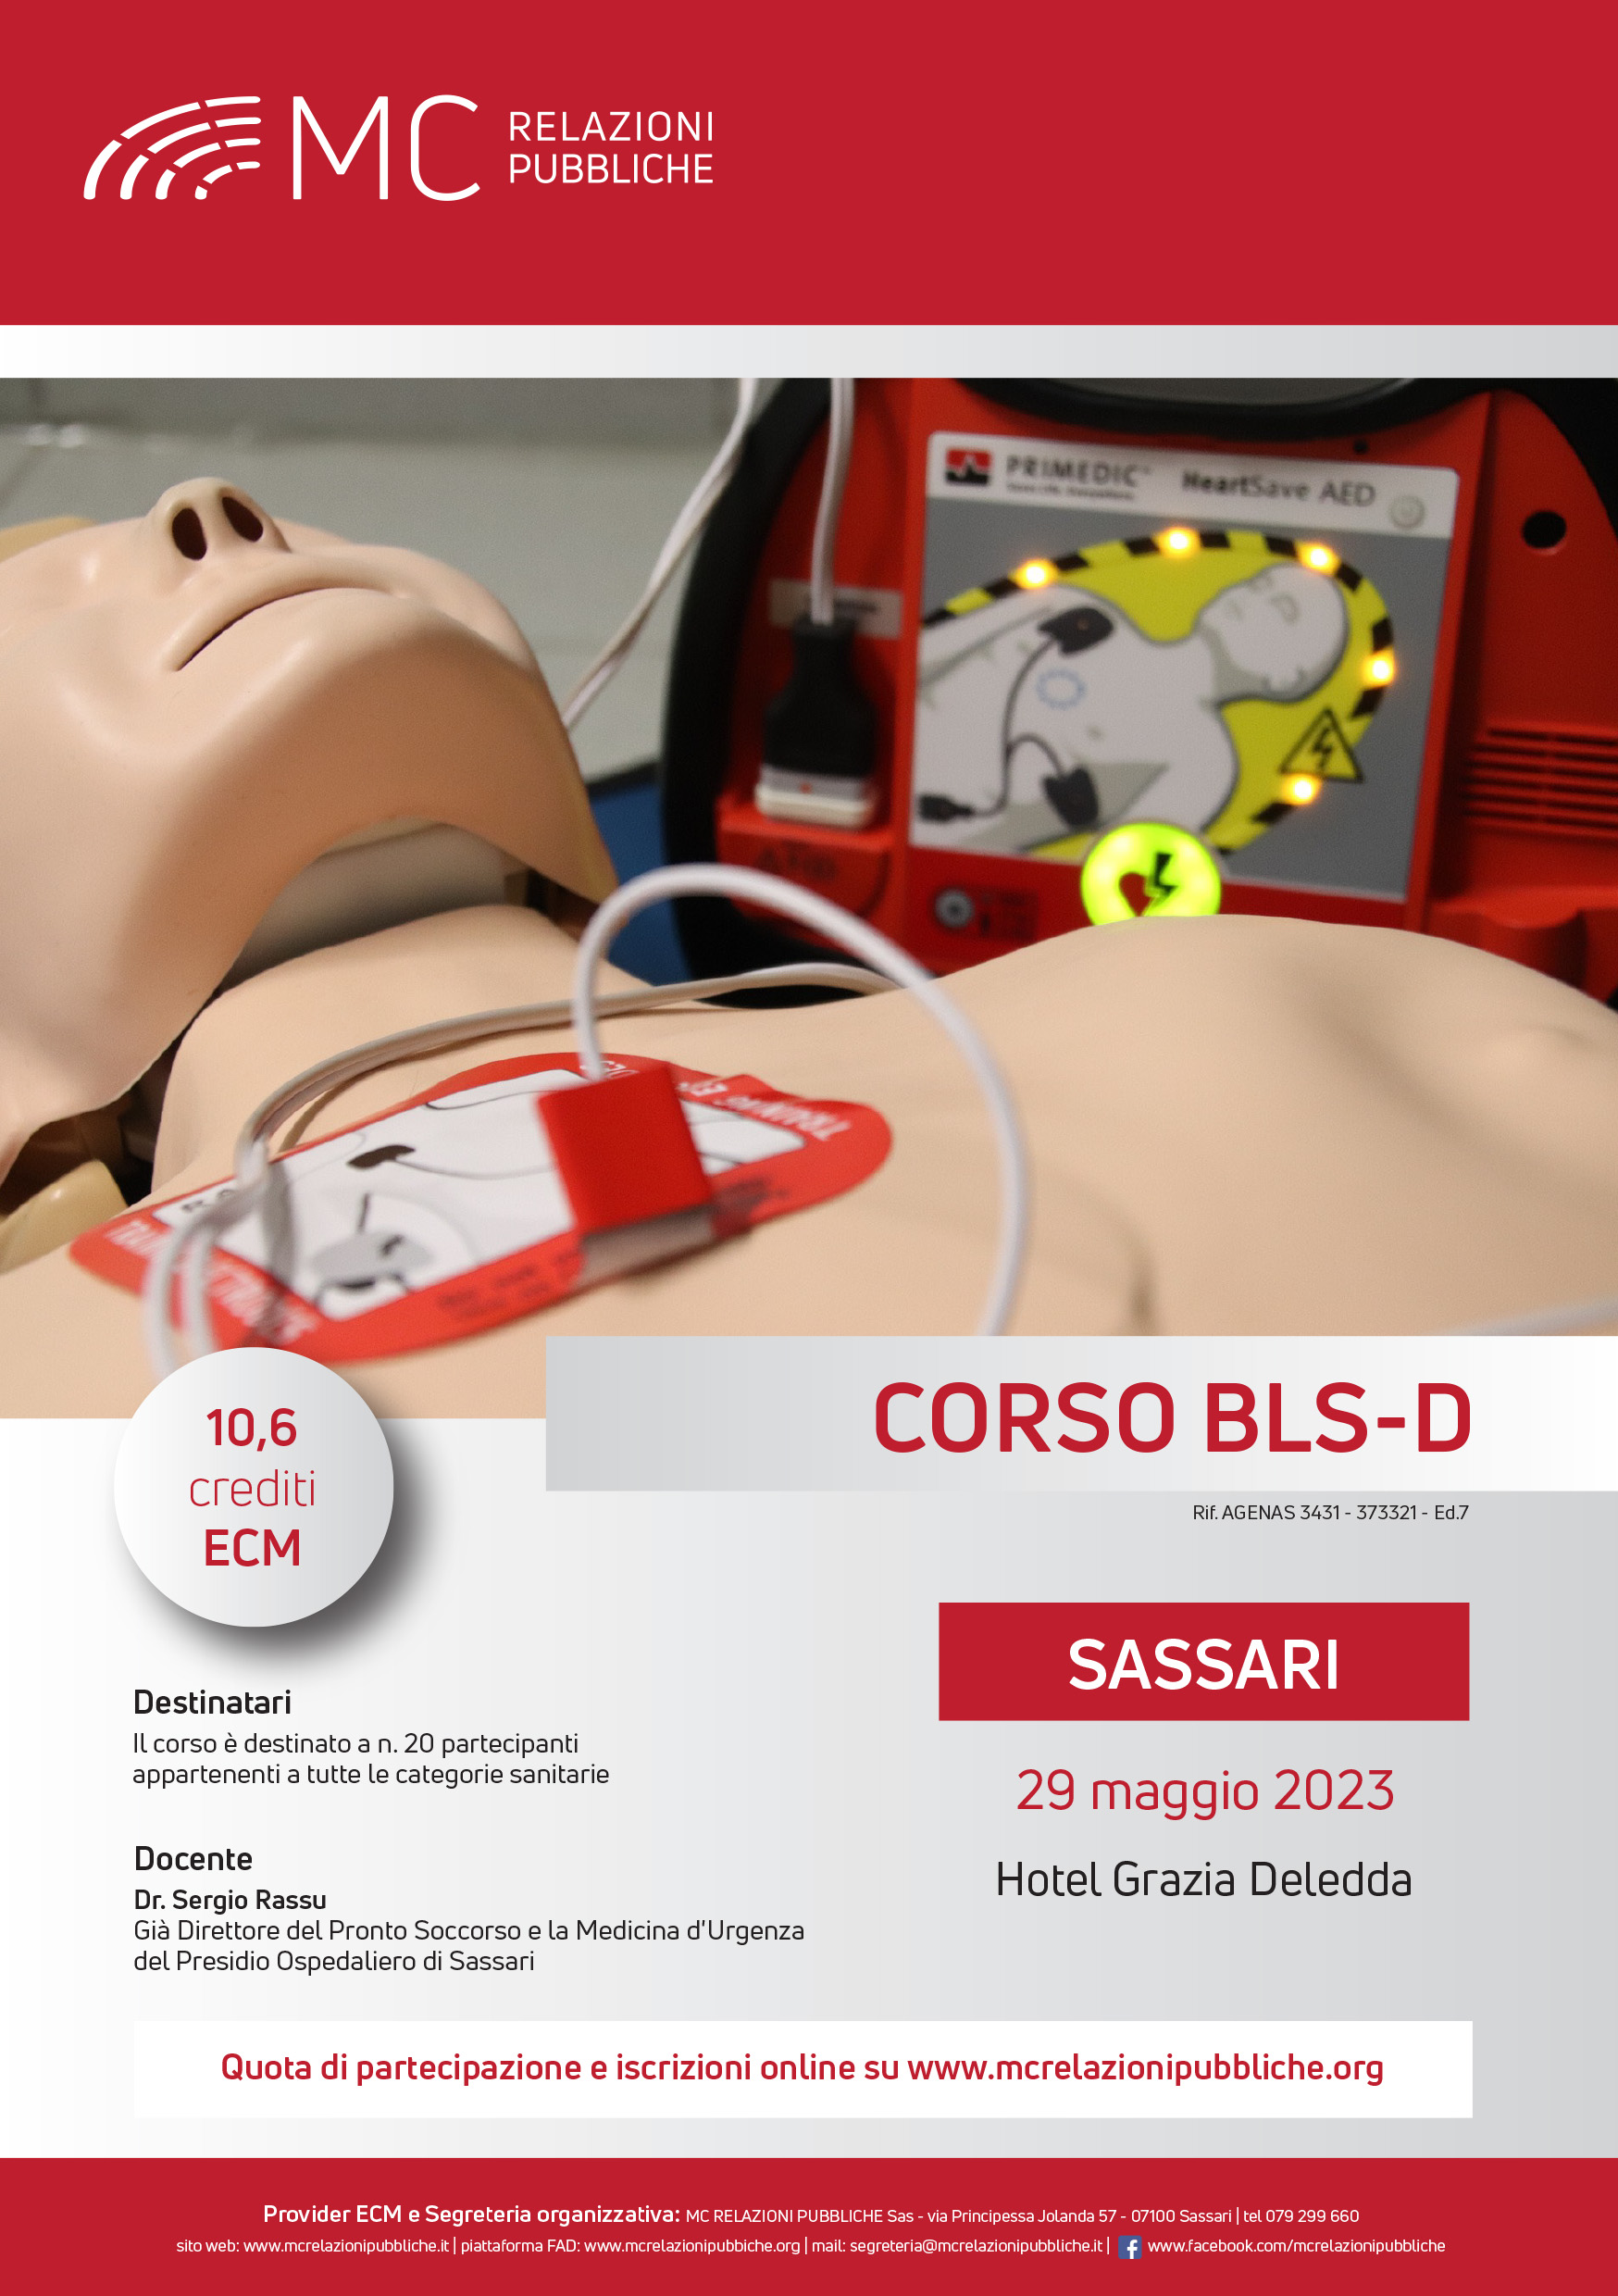 Corso BLS-D. Basic life support-defibrillation ed.7